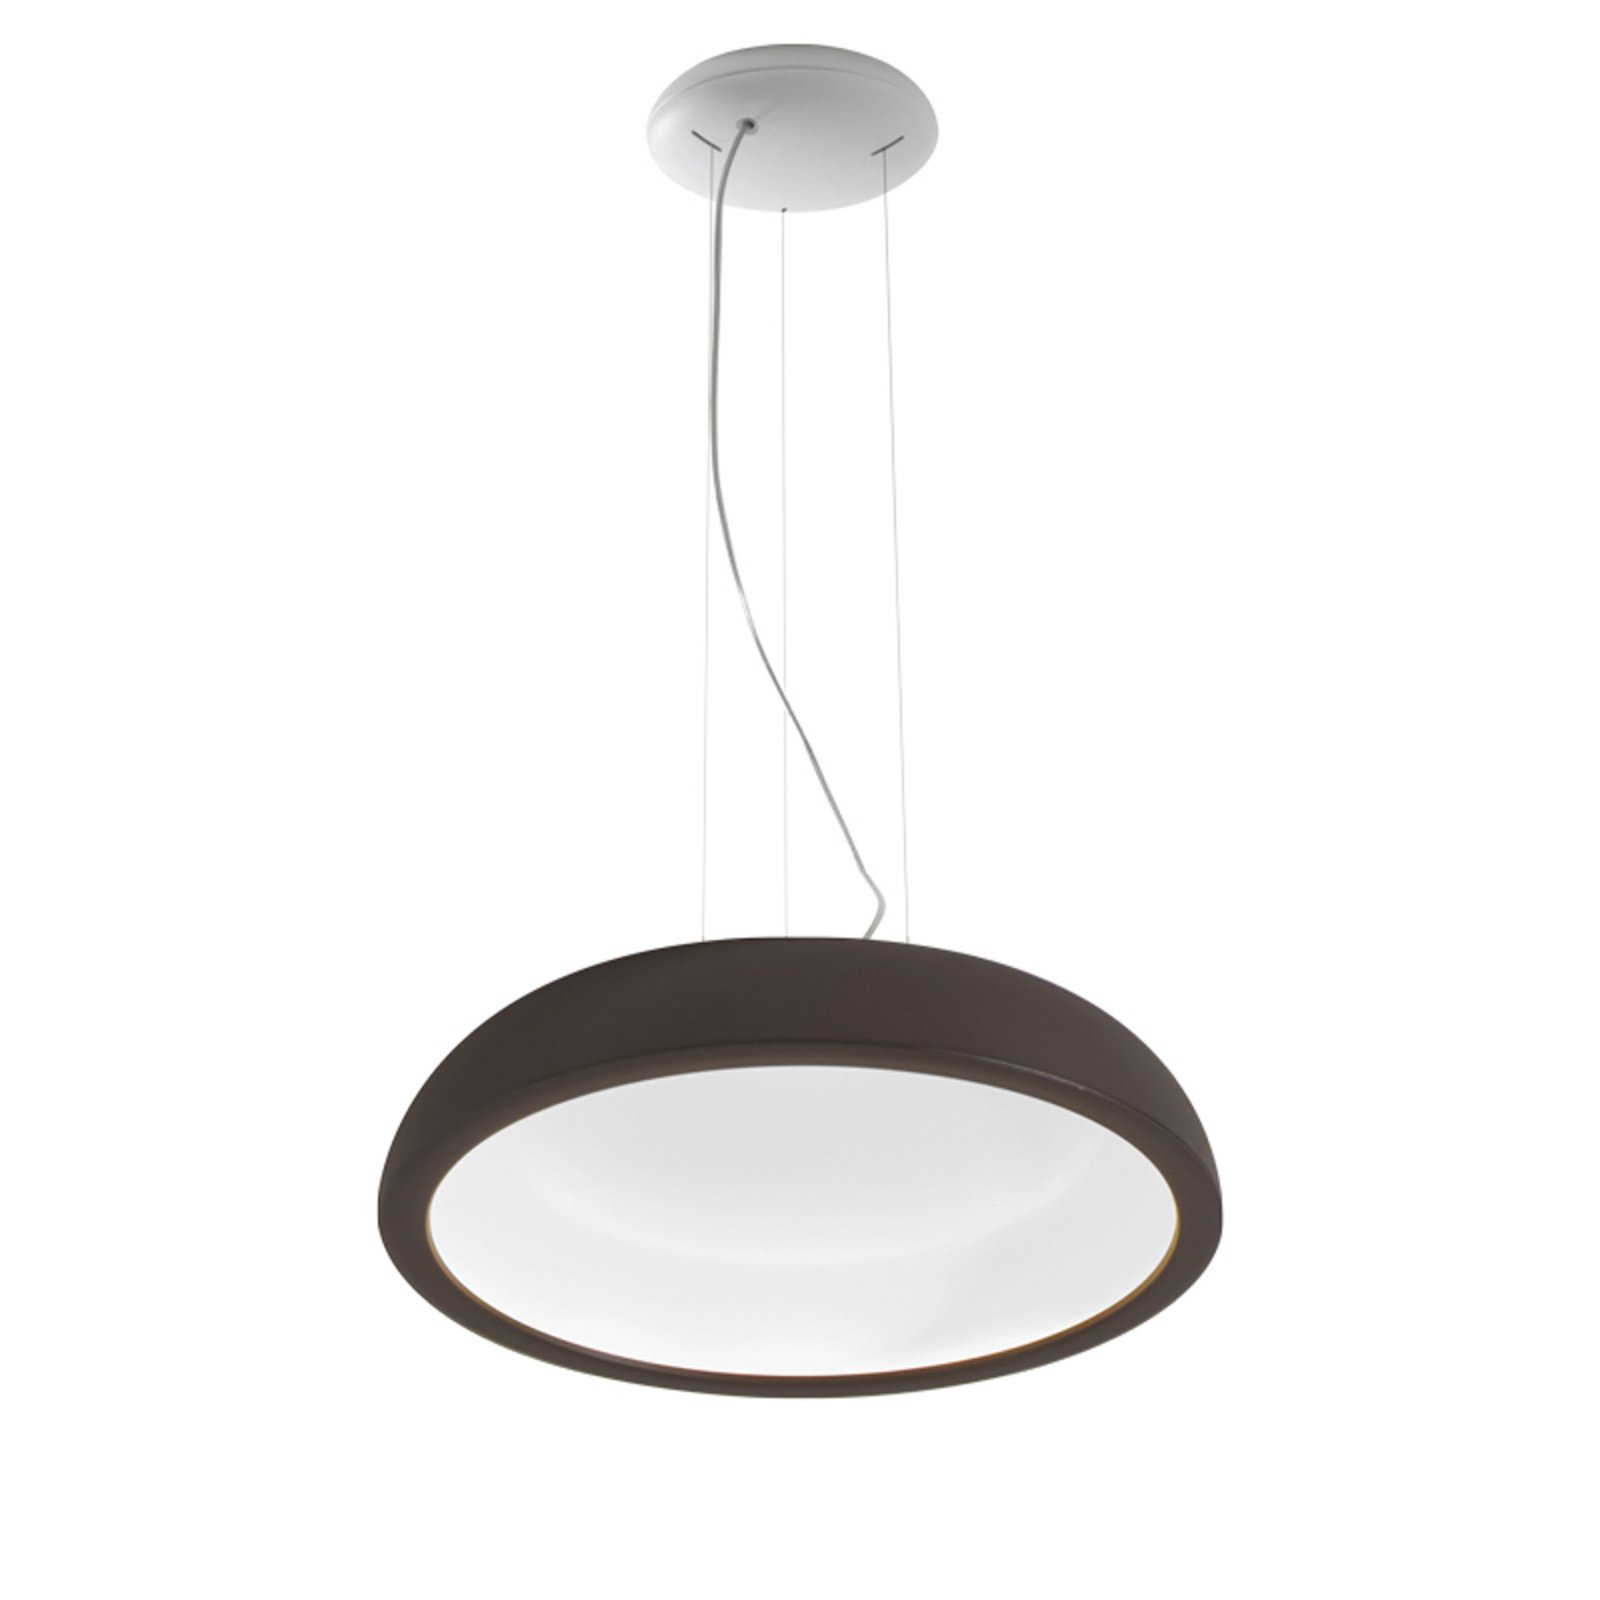 Stilnovo Reflexio LED-hänglampa, Ø46cm, brun